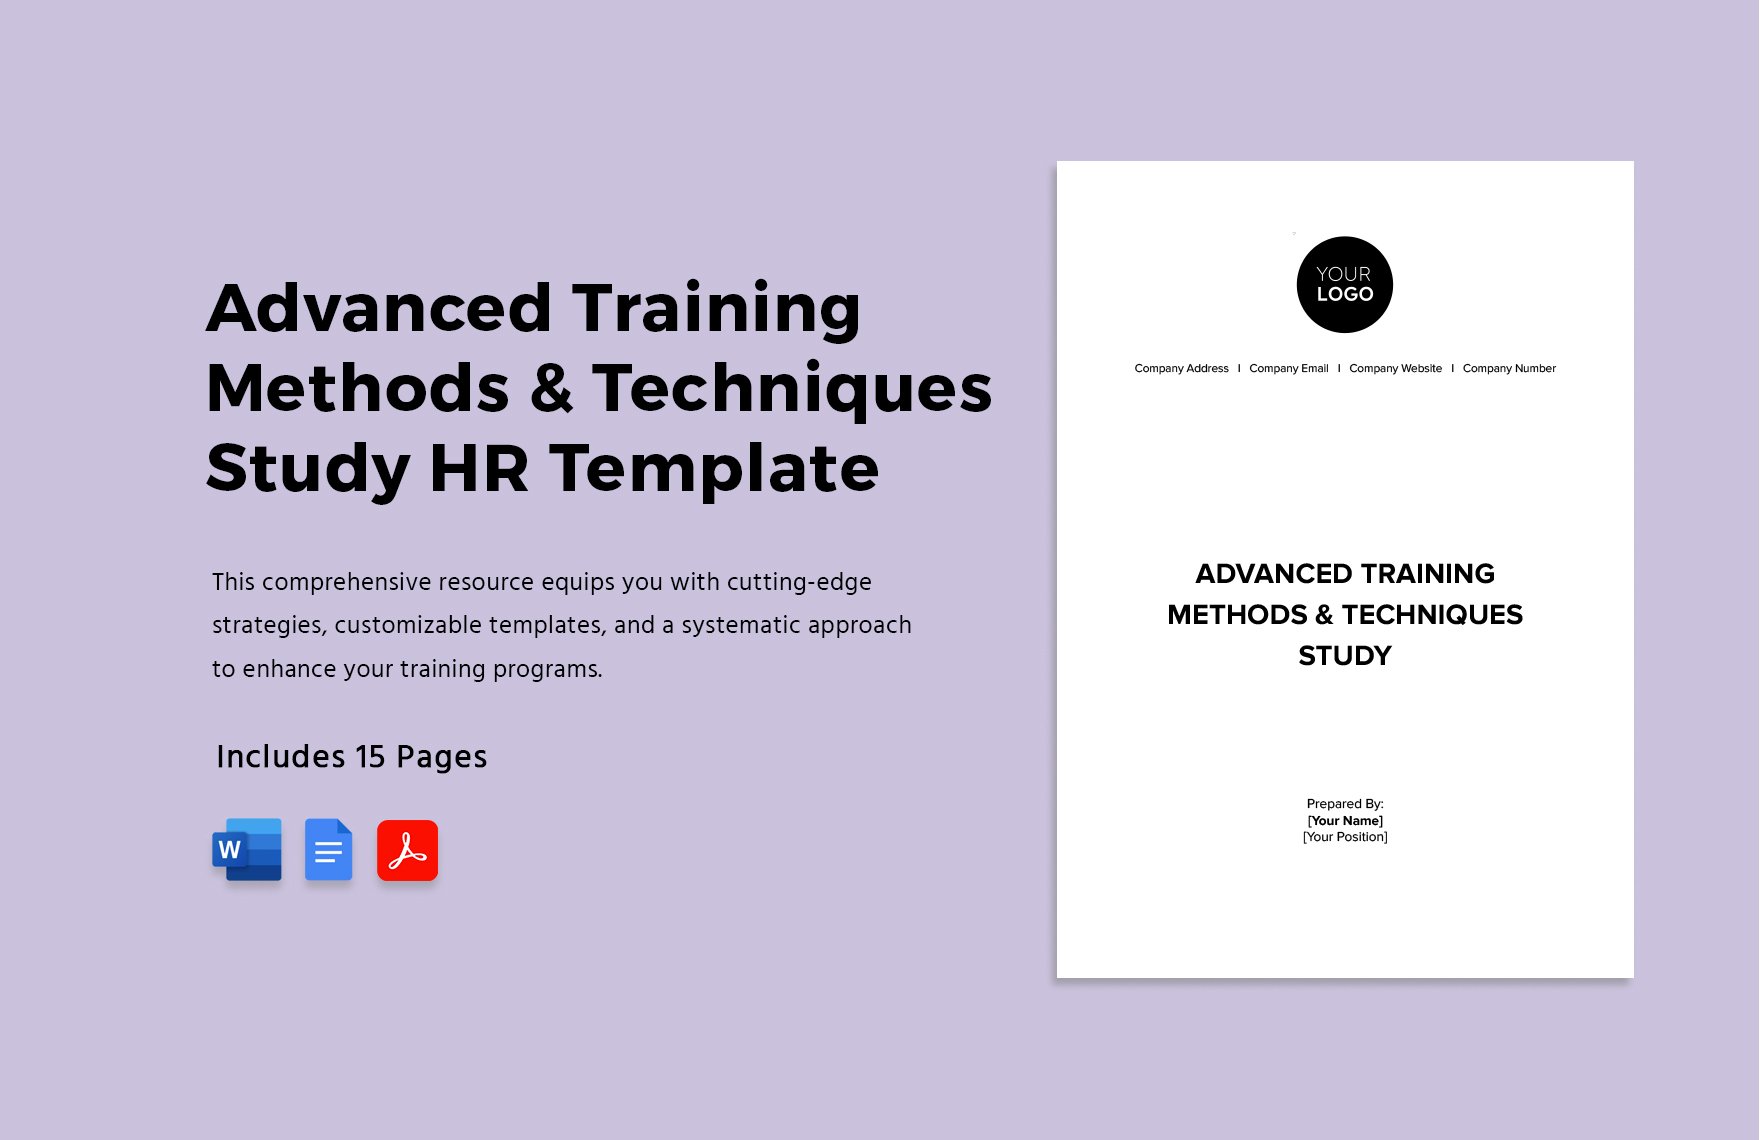 Advanced Training Methods & Techniques Study HR Template